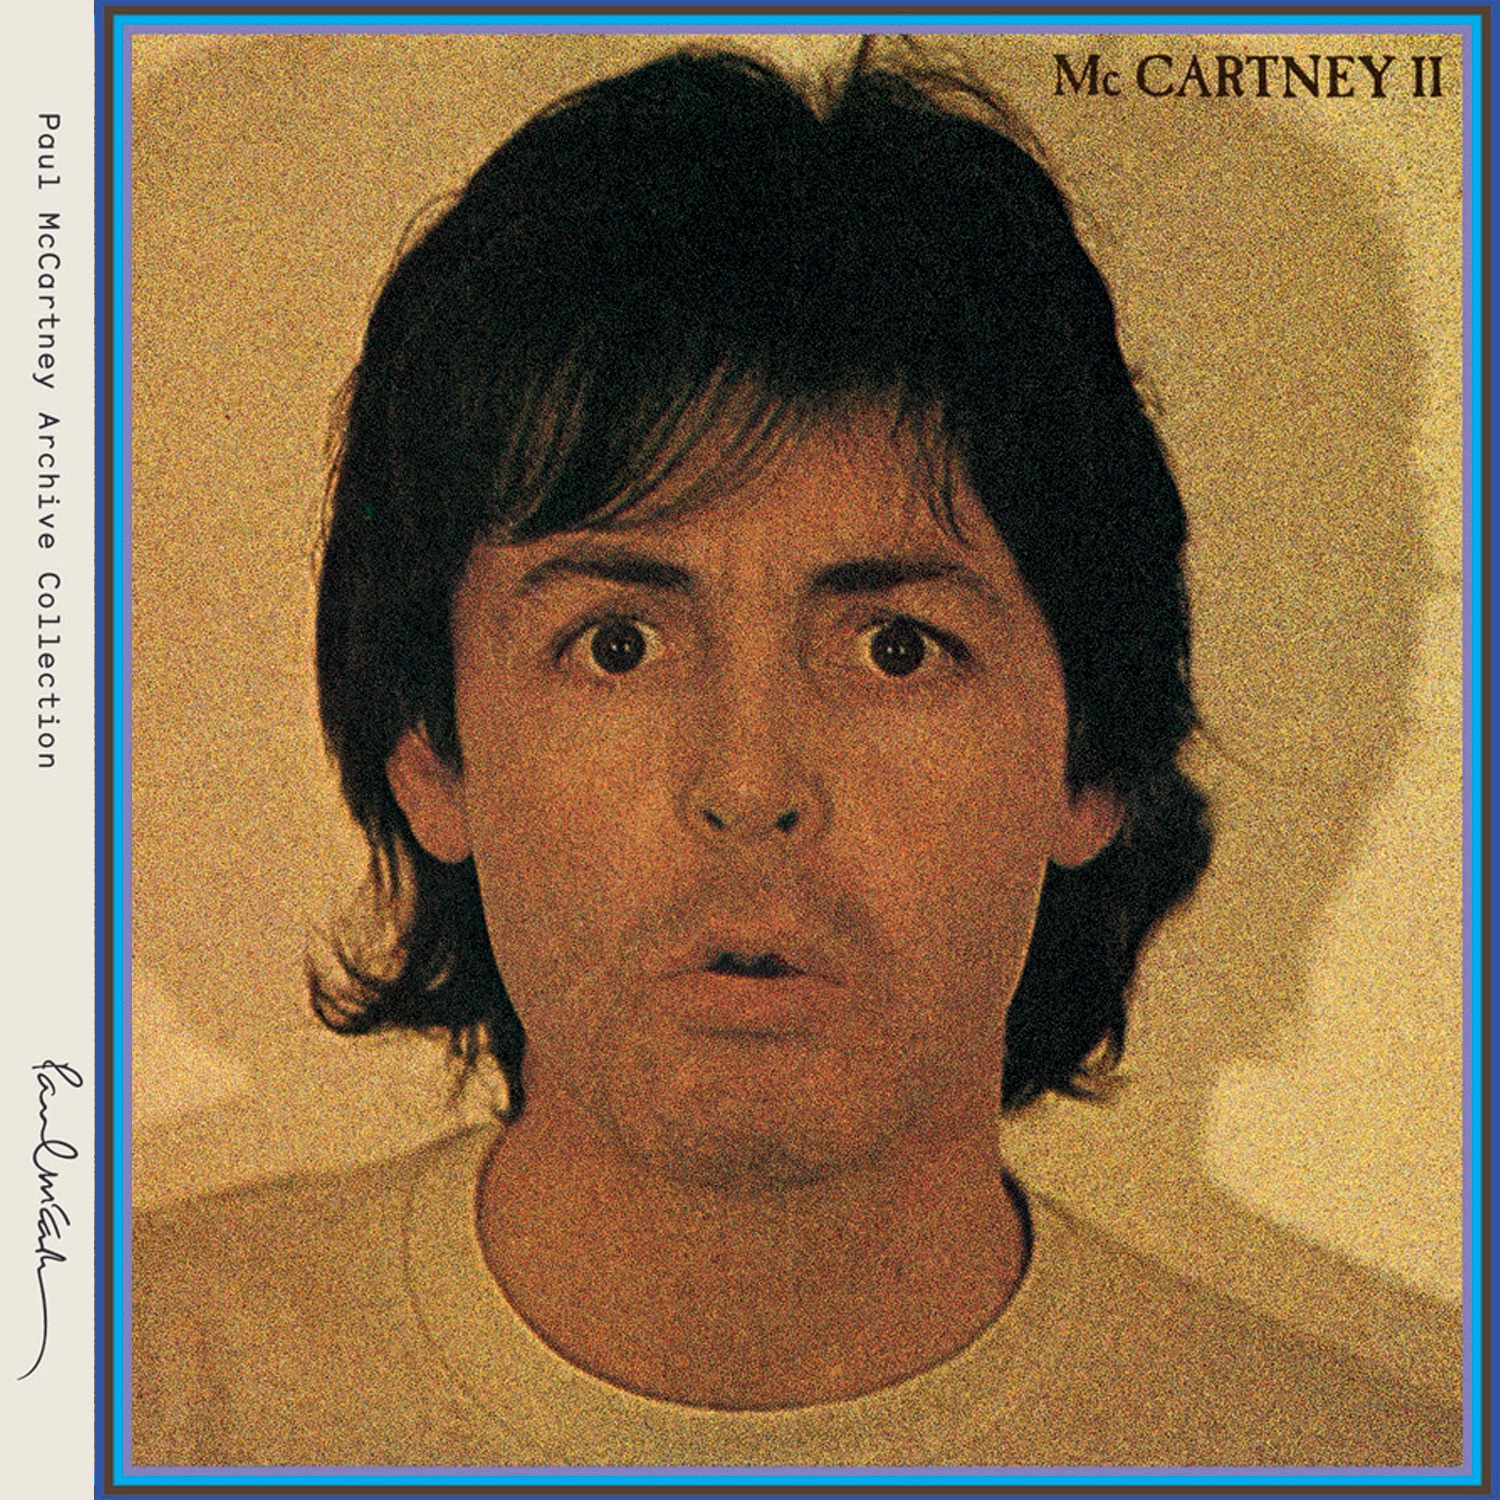 Paul McCartney - Wonderful Christmastime (Full Length Version) - Single